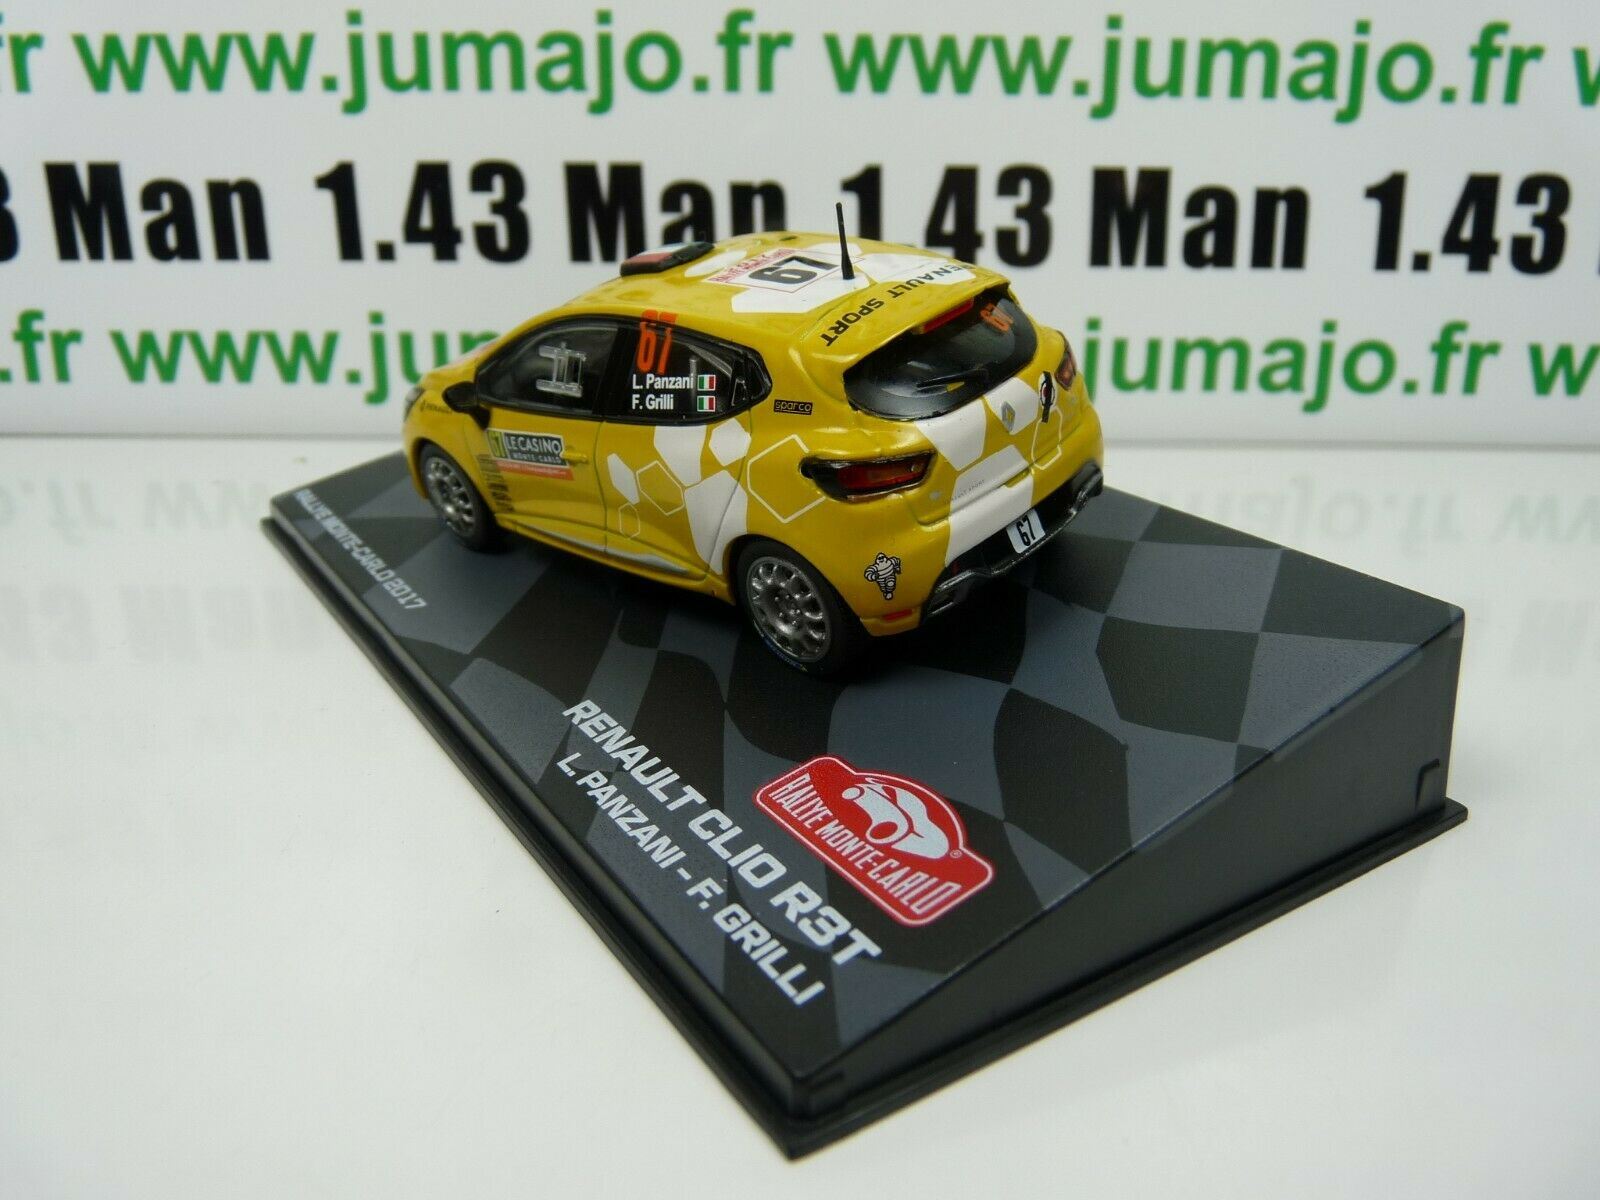 OPO 10 - Voiture Rallye 1/43 Compatible avec Renault Clio RS R3T